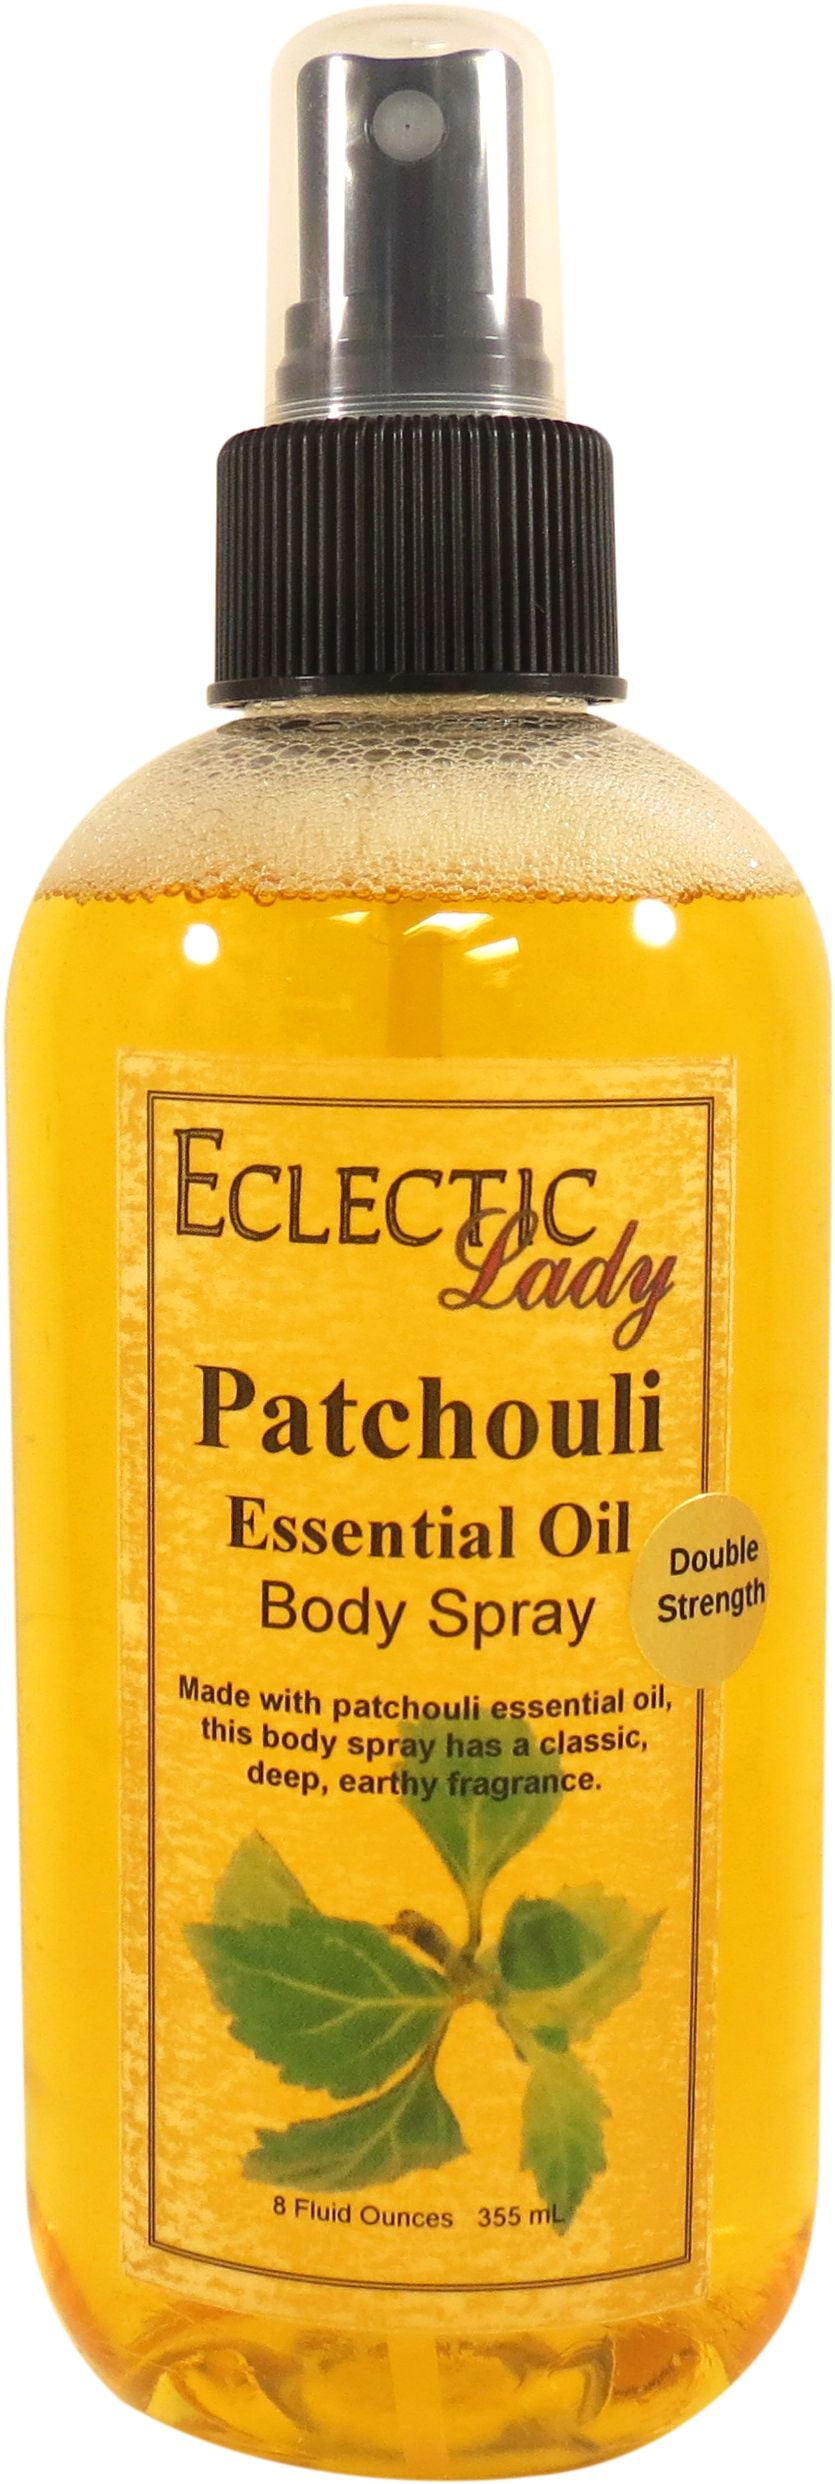 Patchouli Essential Oil Body Spray (Double Strength), 8 ounces